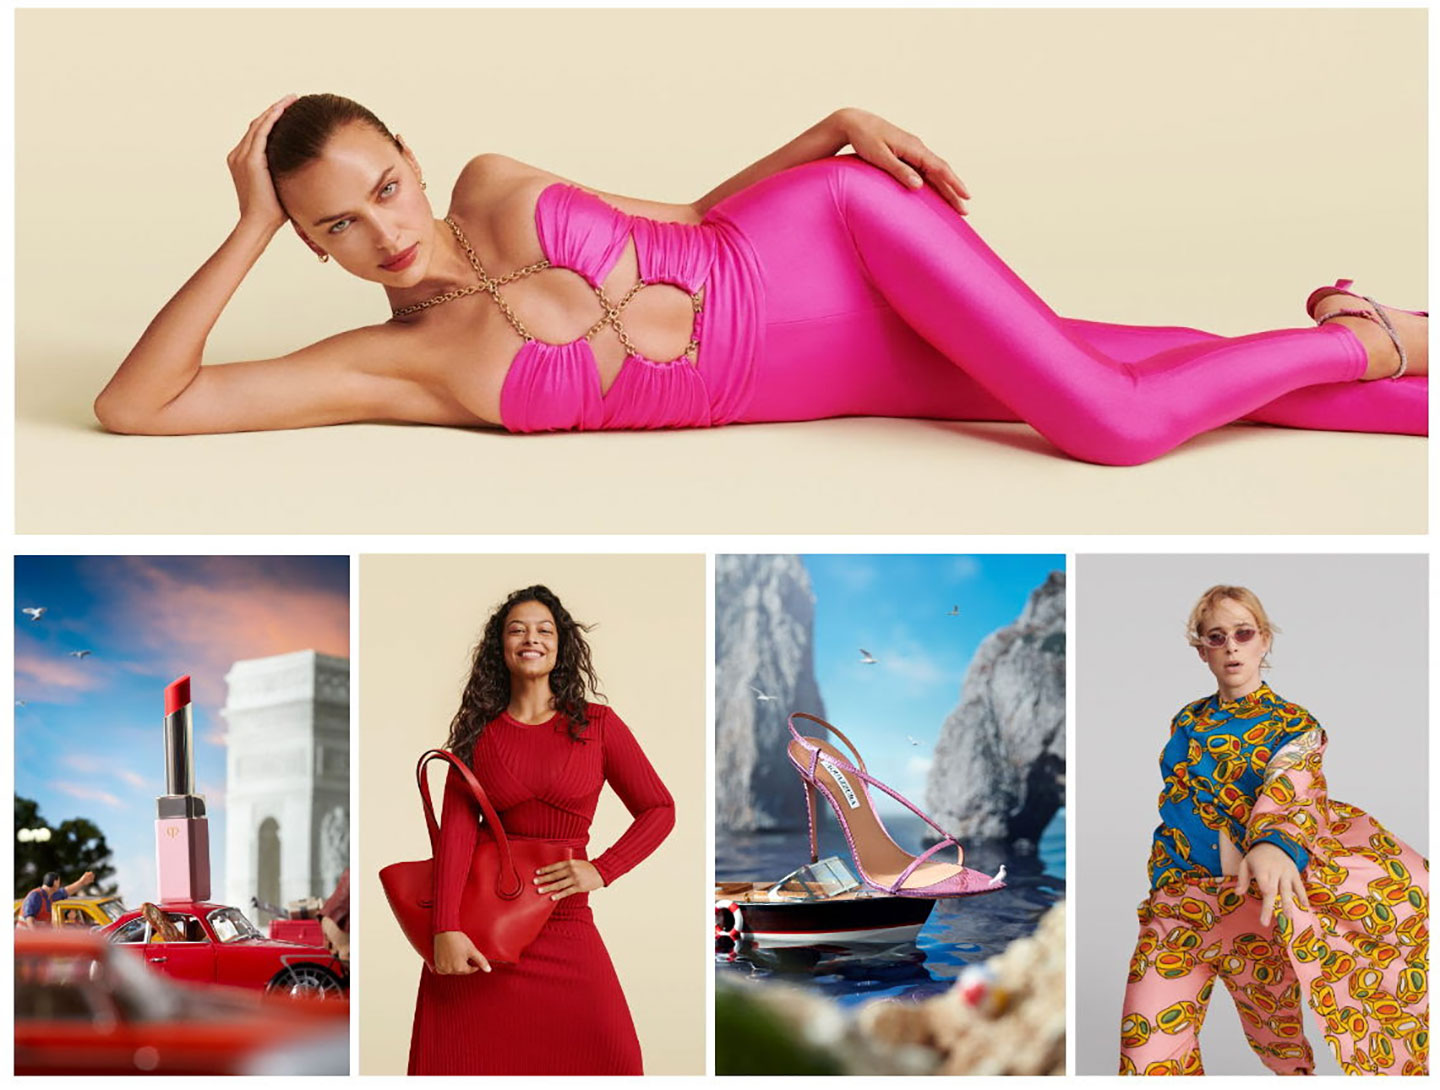 Amaz(ing)on luxury fashion – THE SKIER SCRIBBLER